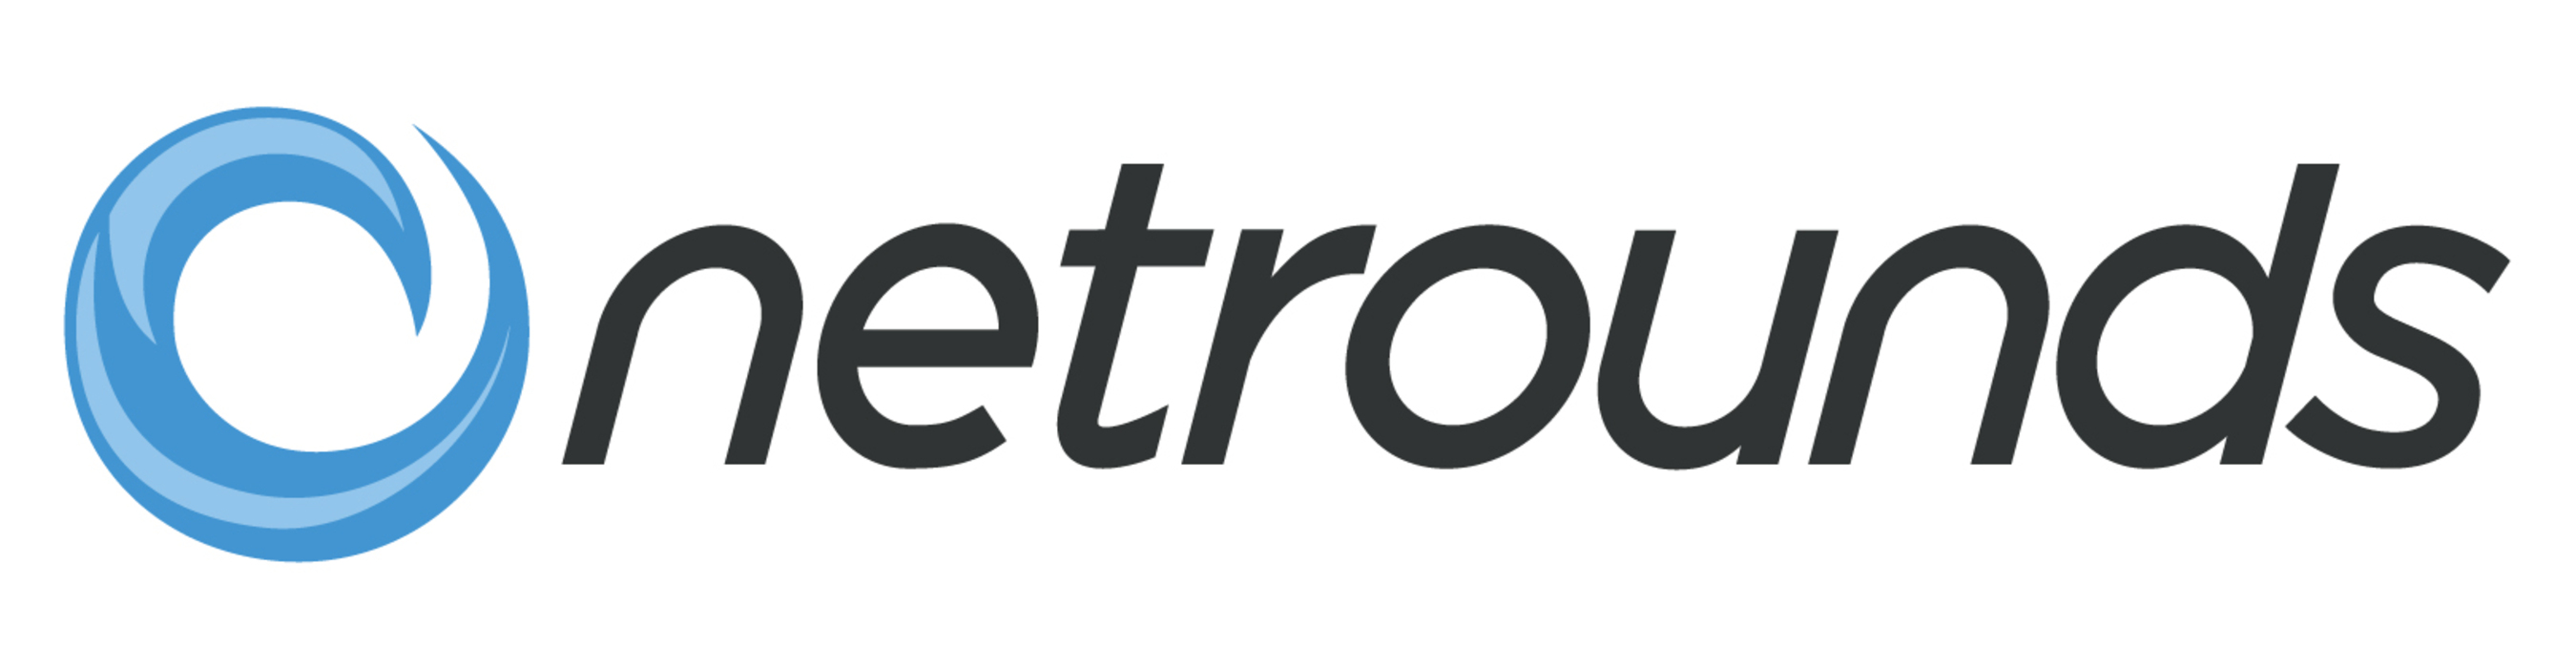 Netrounds Logo (PRNewsFoto/Netrounds)